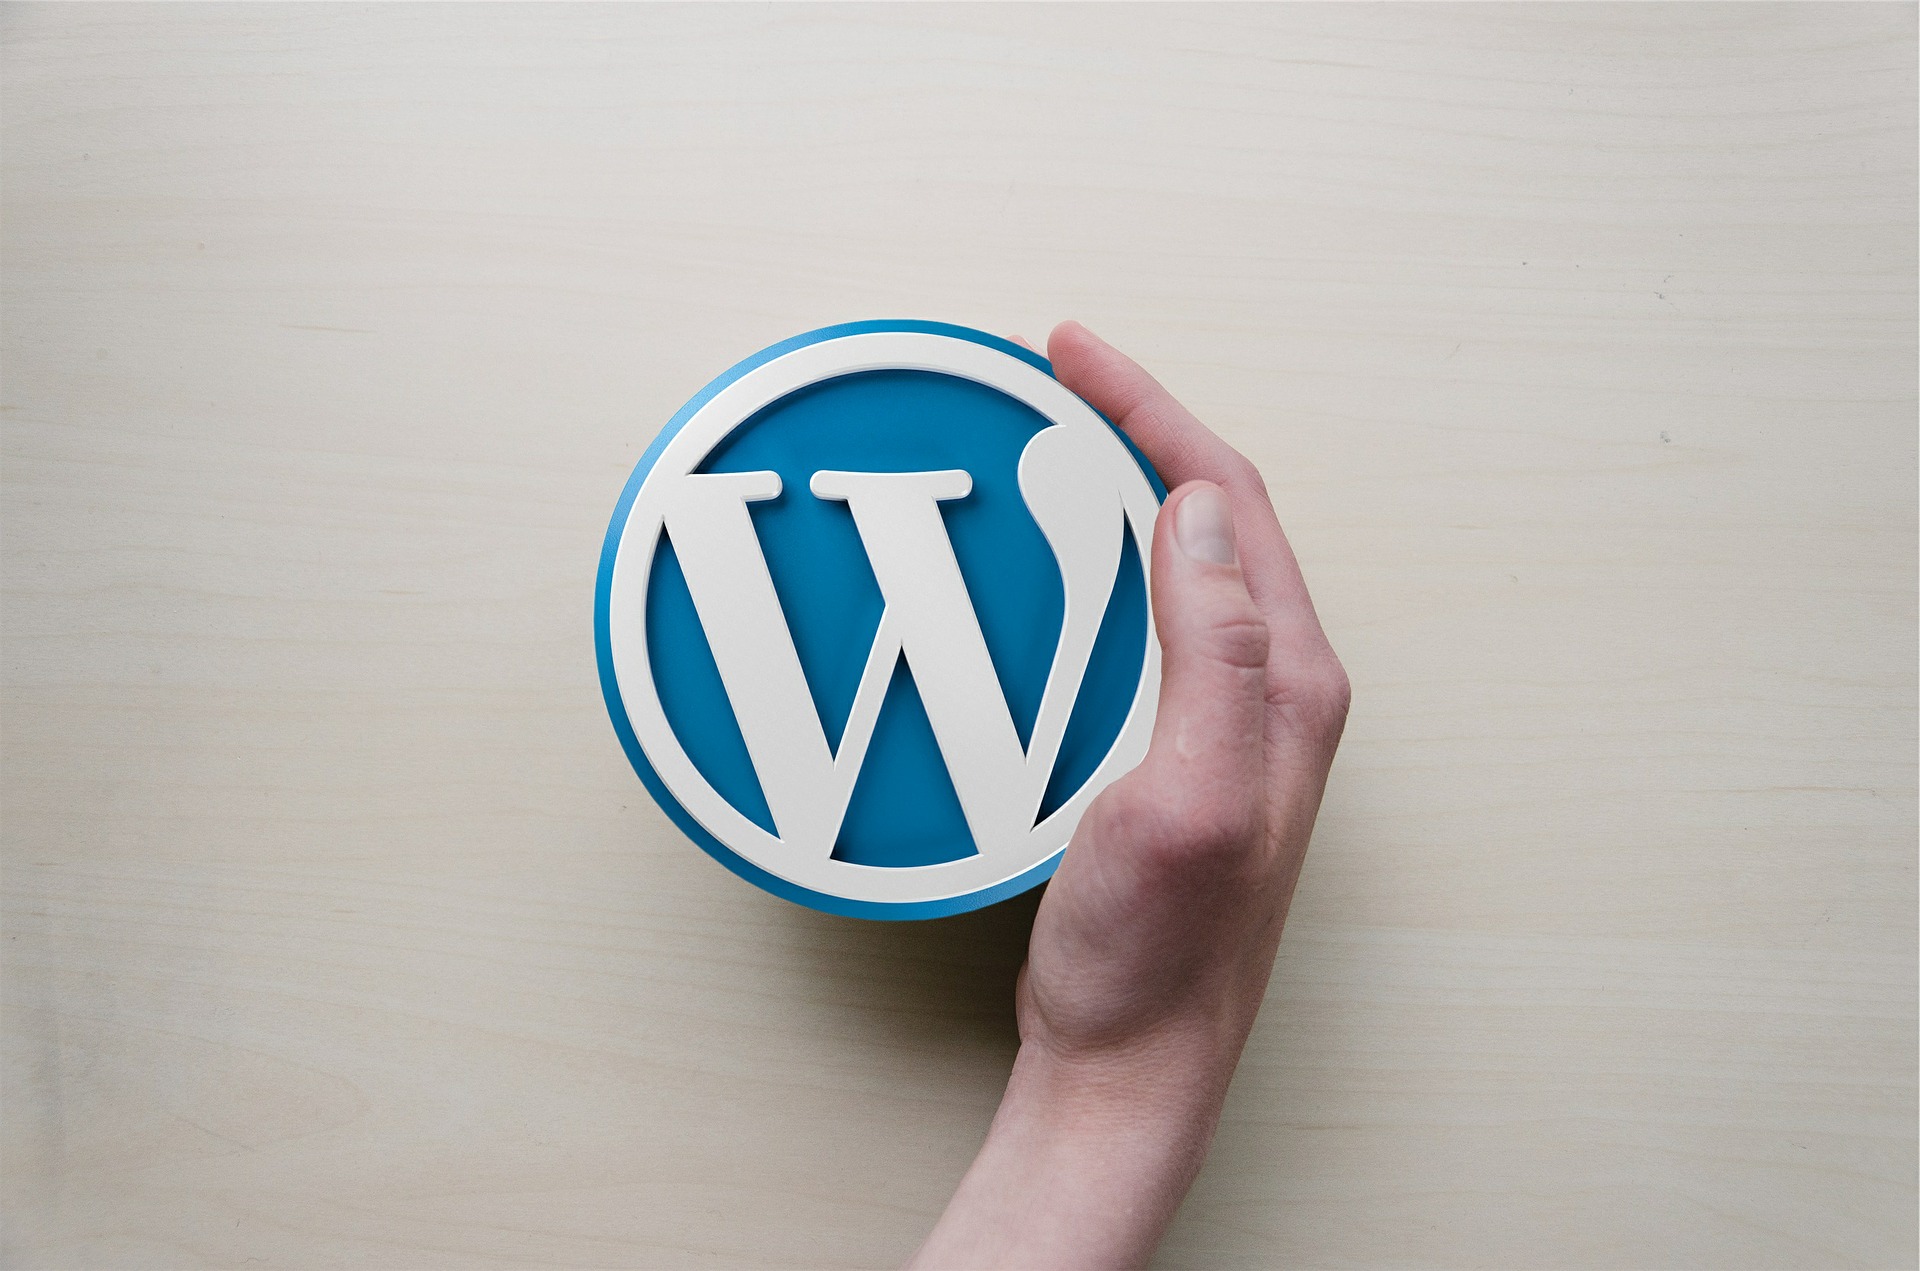 Hand holding a Wordpress logo